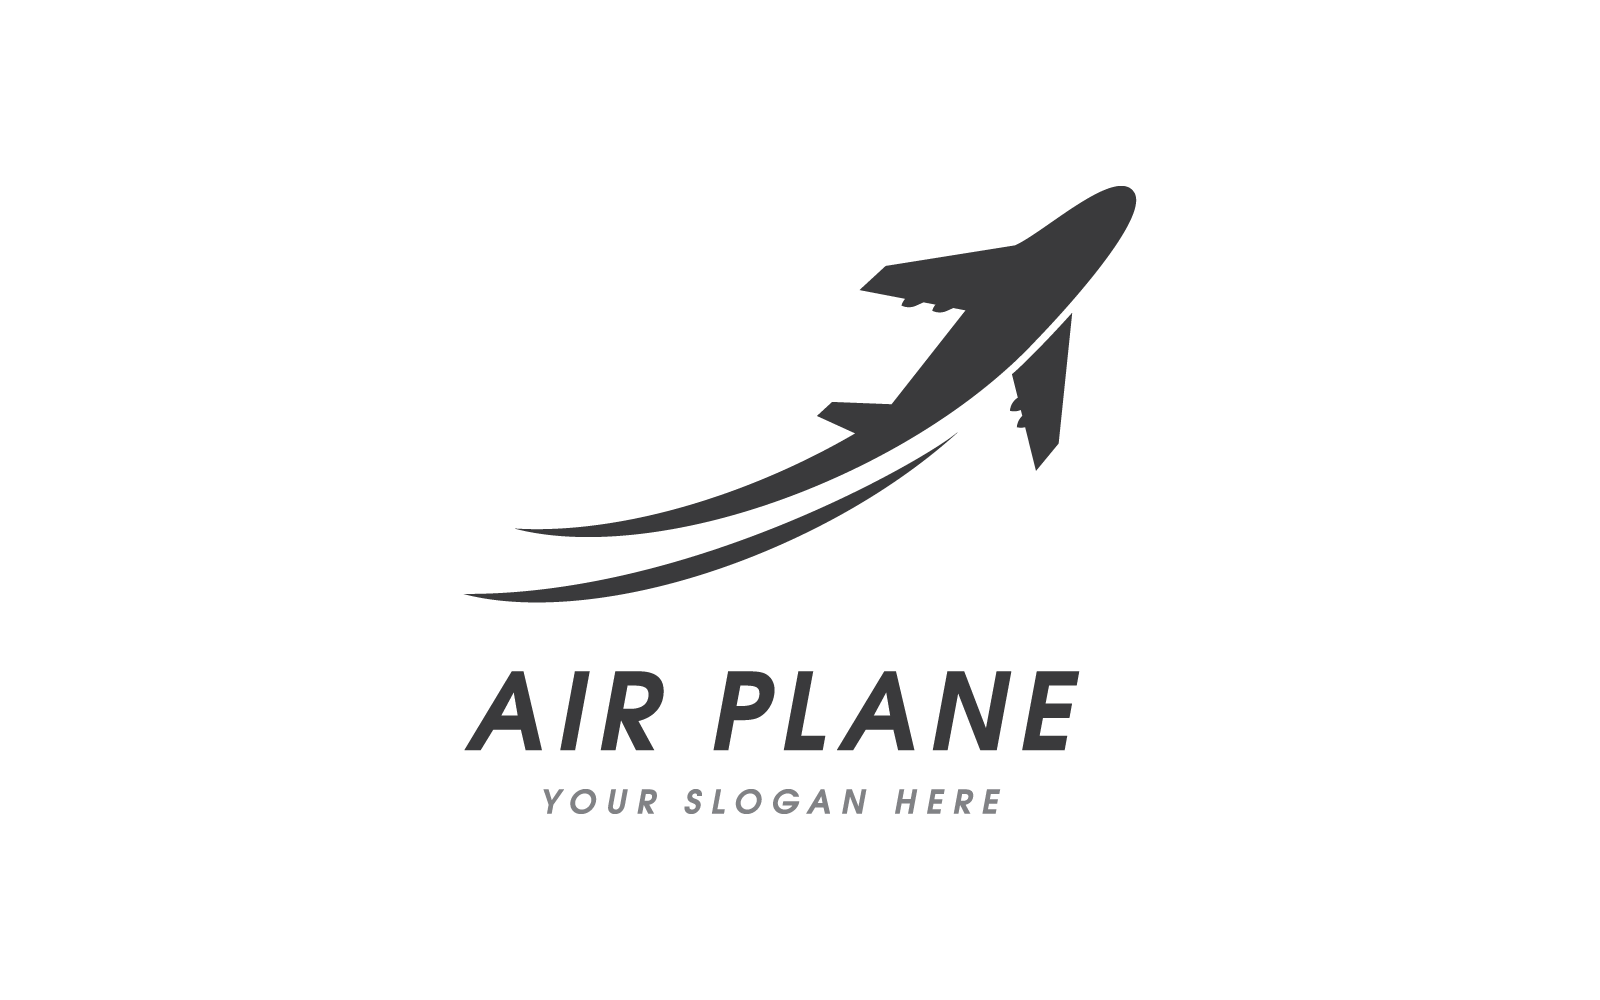 Air Plane illustration logo flat design vector template